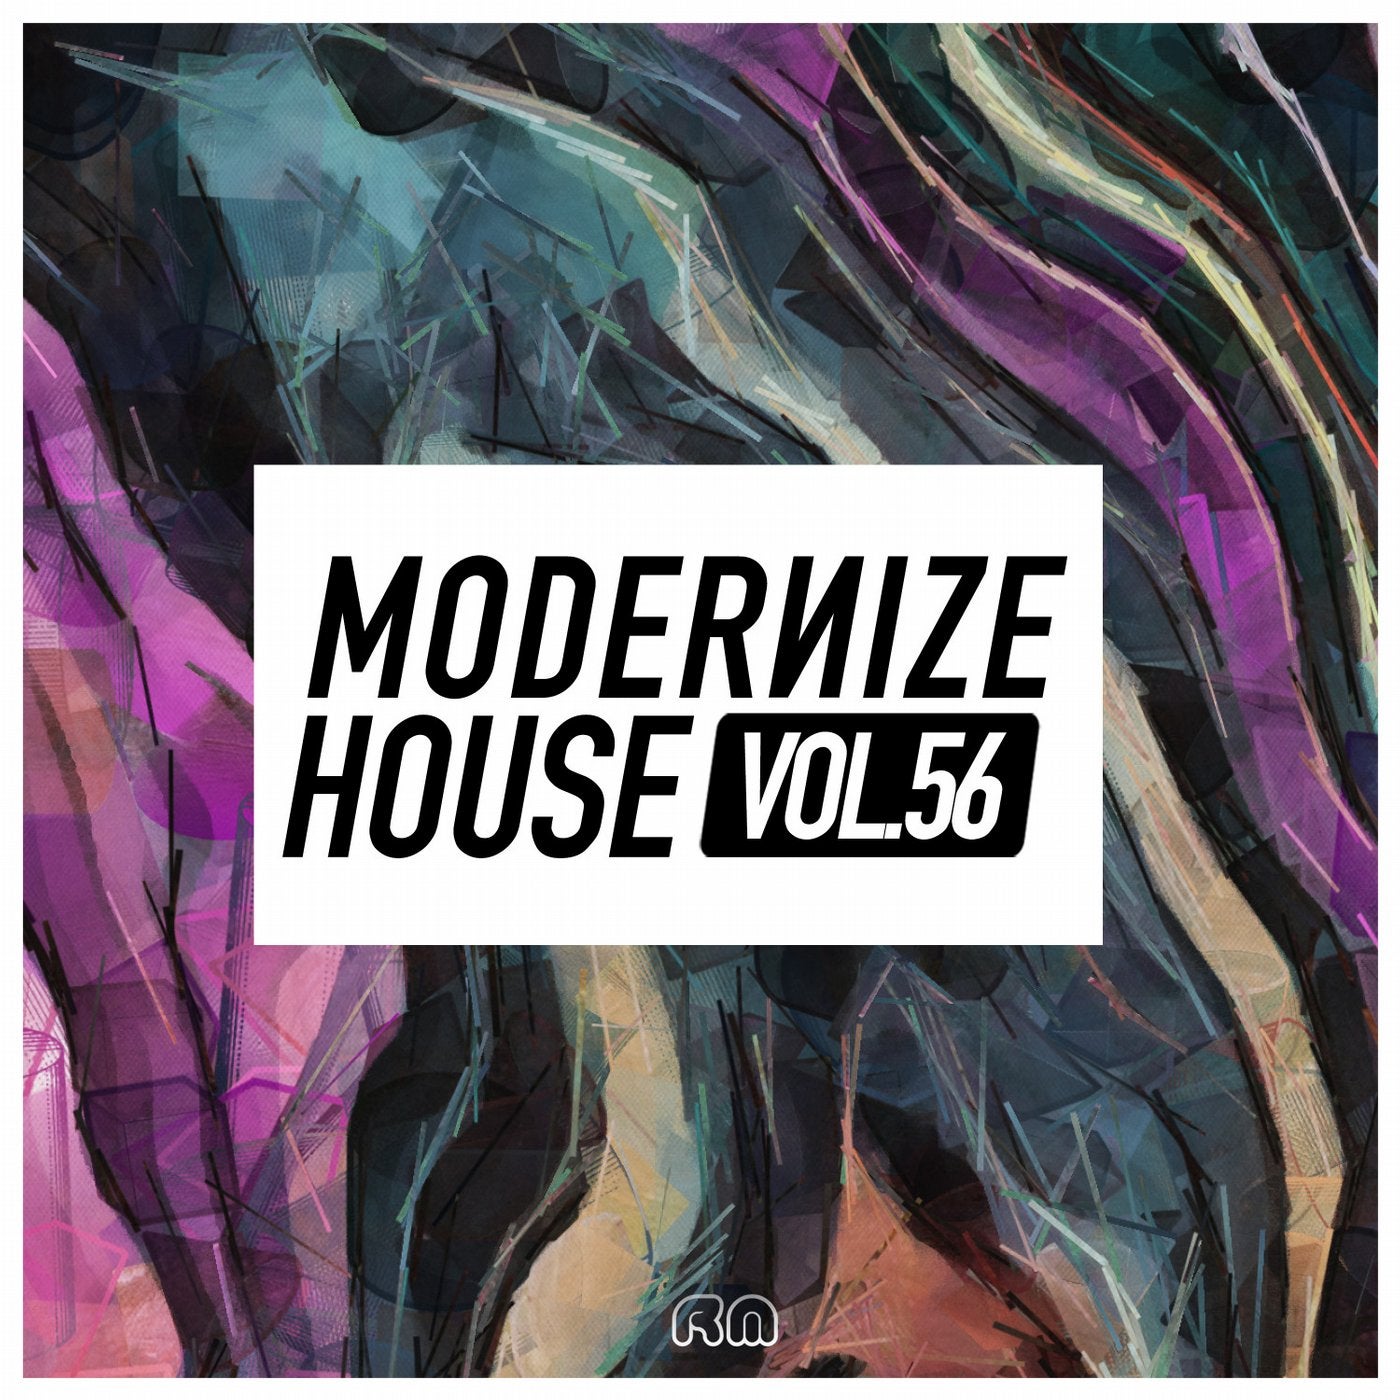 Modernize House Vol. 56